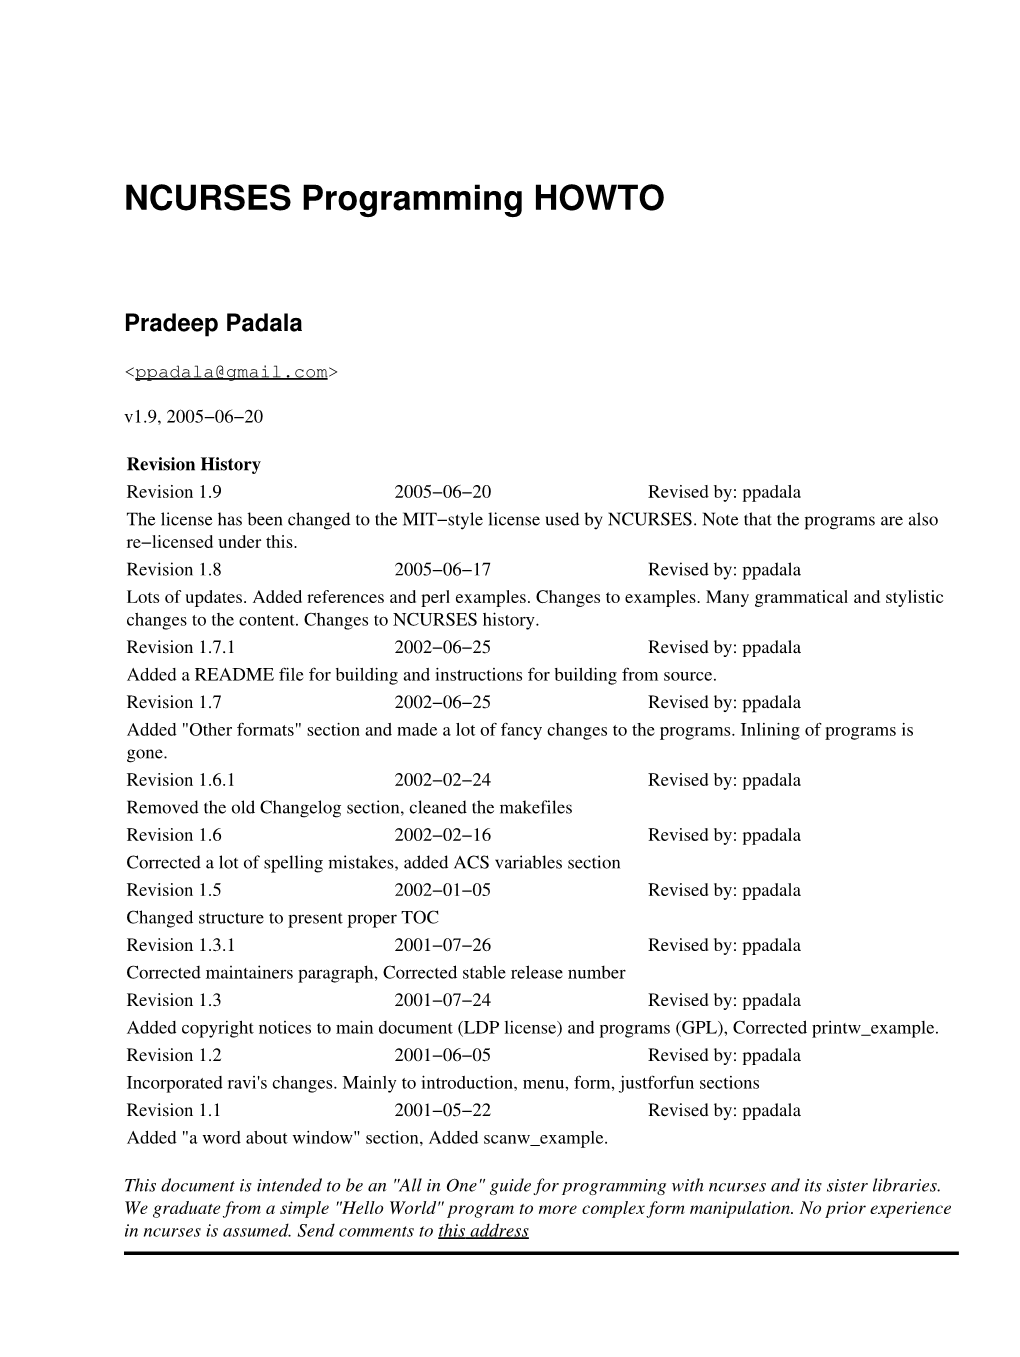 NCURSES-Programming-HOWTO.Pdf